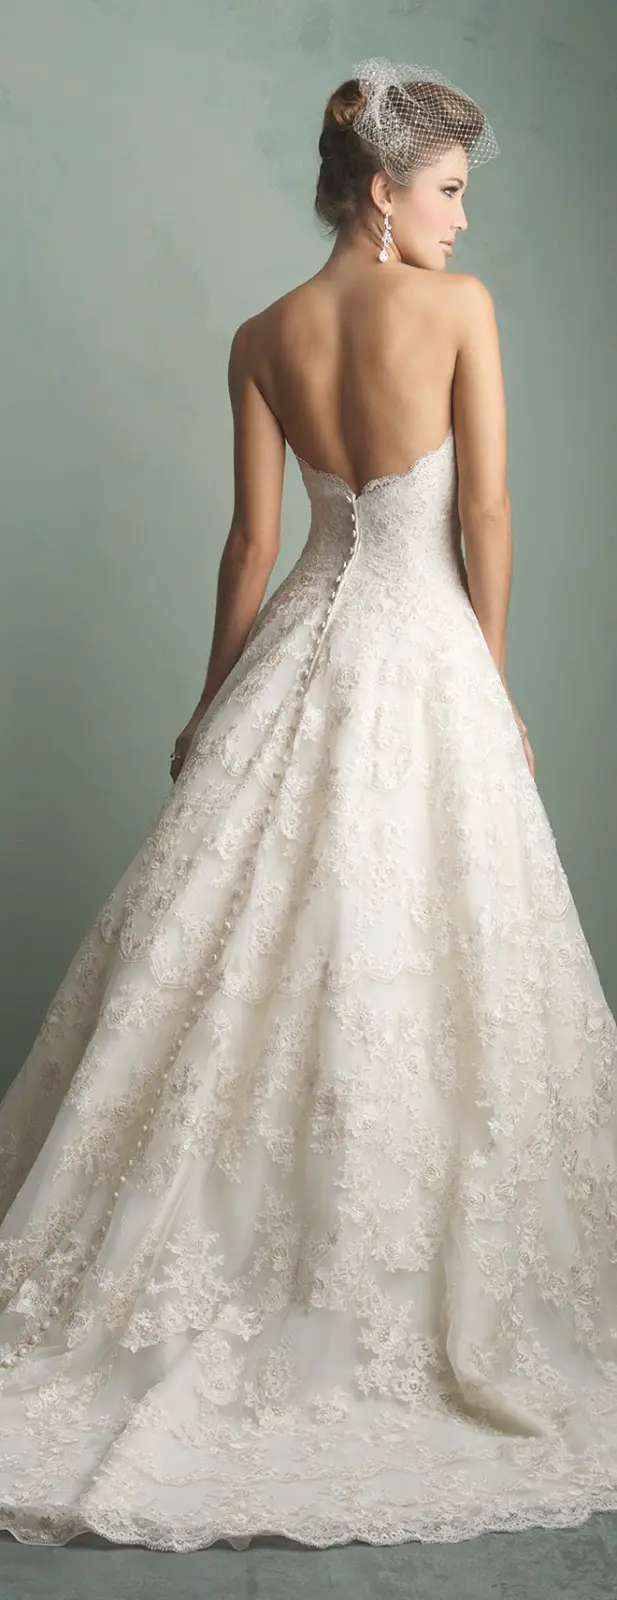 Best Wedding Dresses of 2014 - Allure Bridals